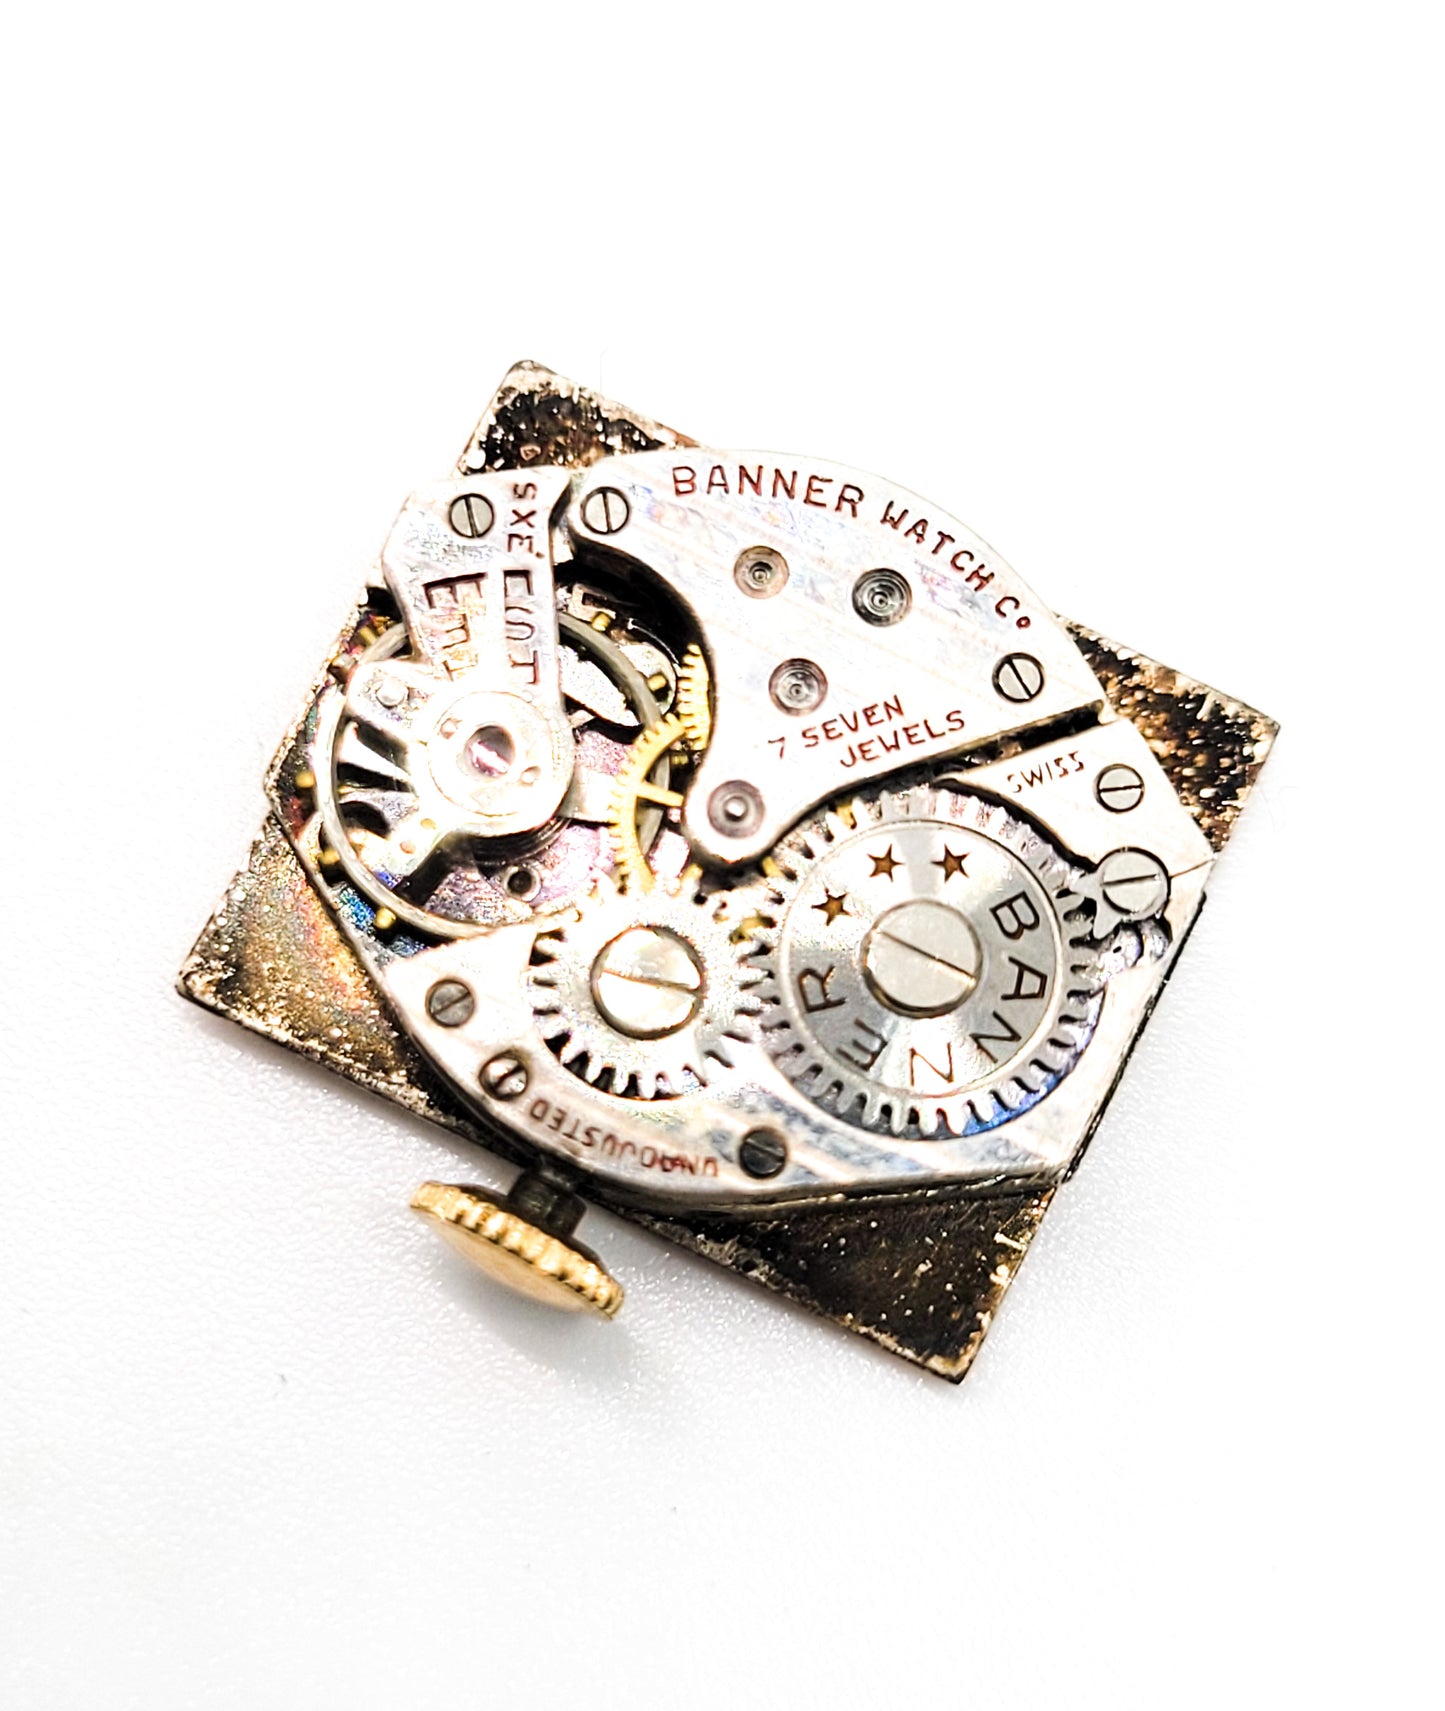 Banner 7 Jewel gold over sterling silver vintage pocket watch brooch For Repair